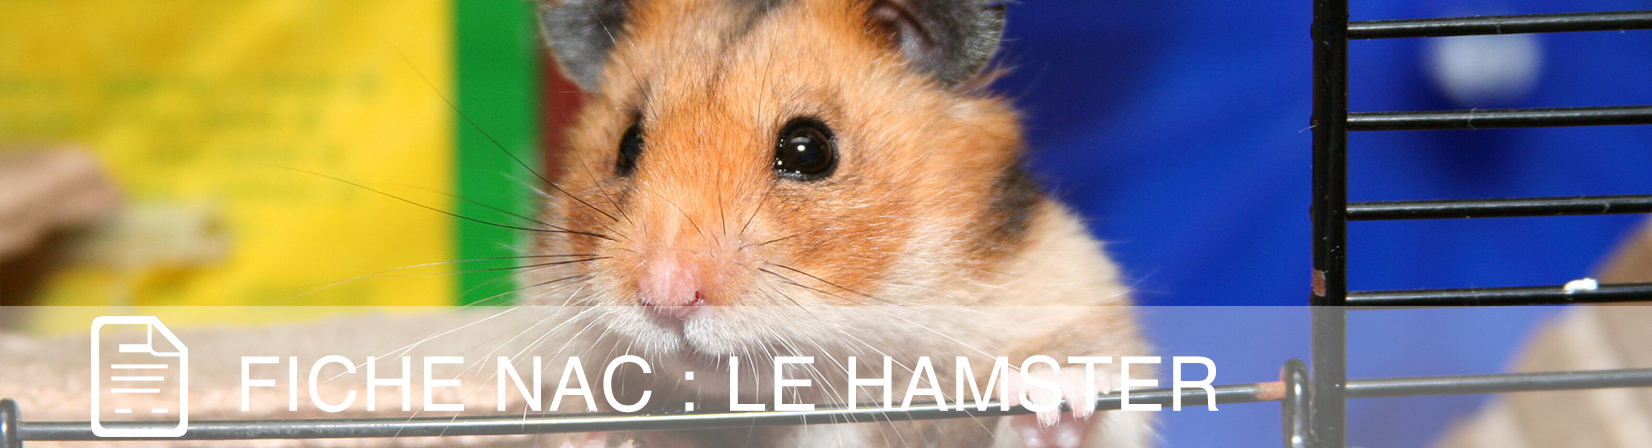 fiche-nac-hamster